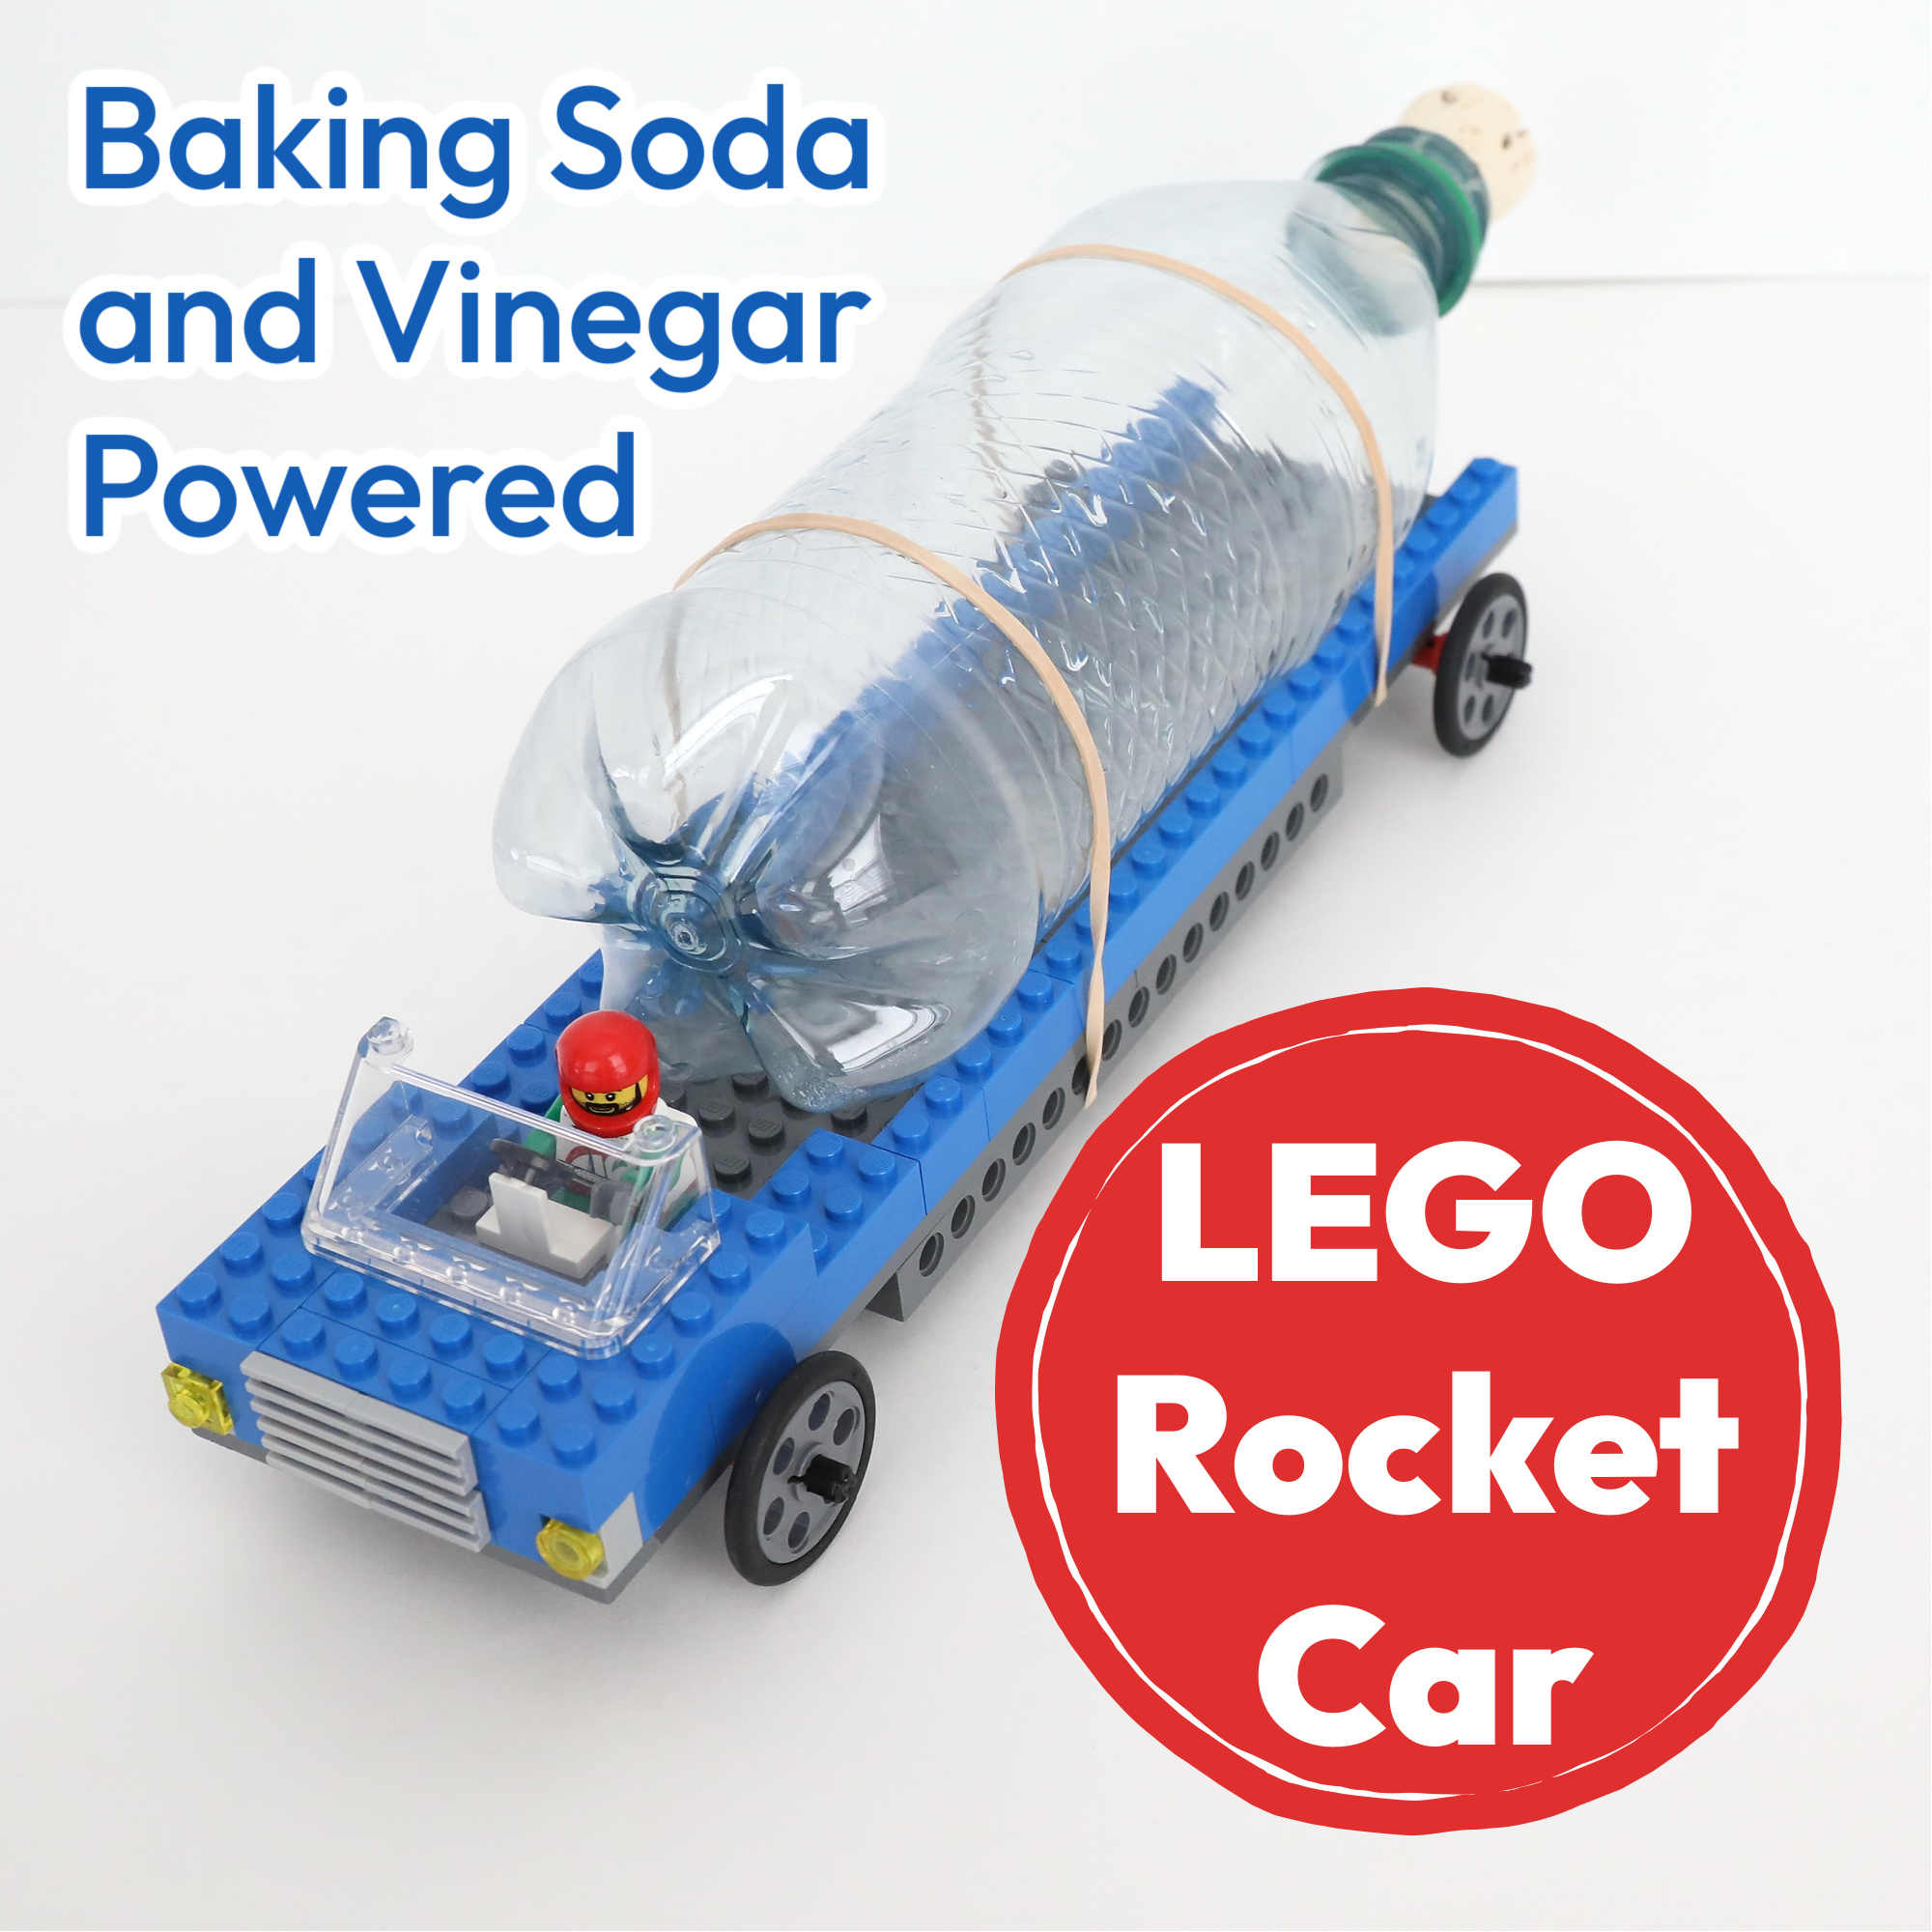 Baking Soda and Vinegar Powered Rocket Car